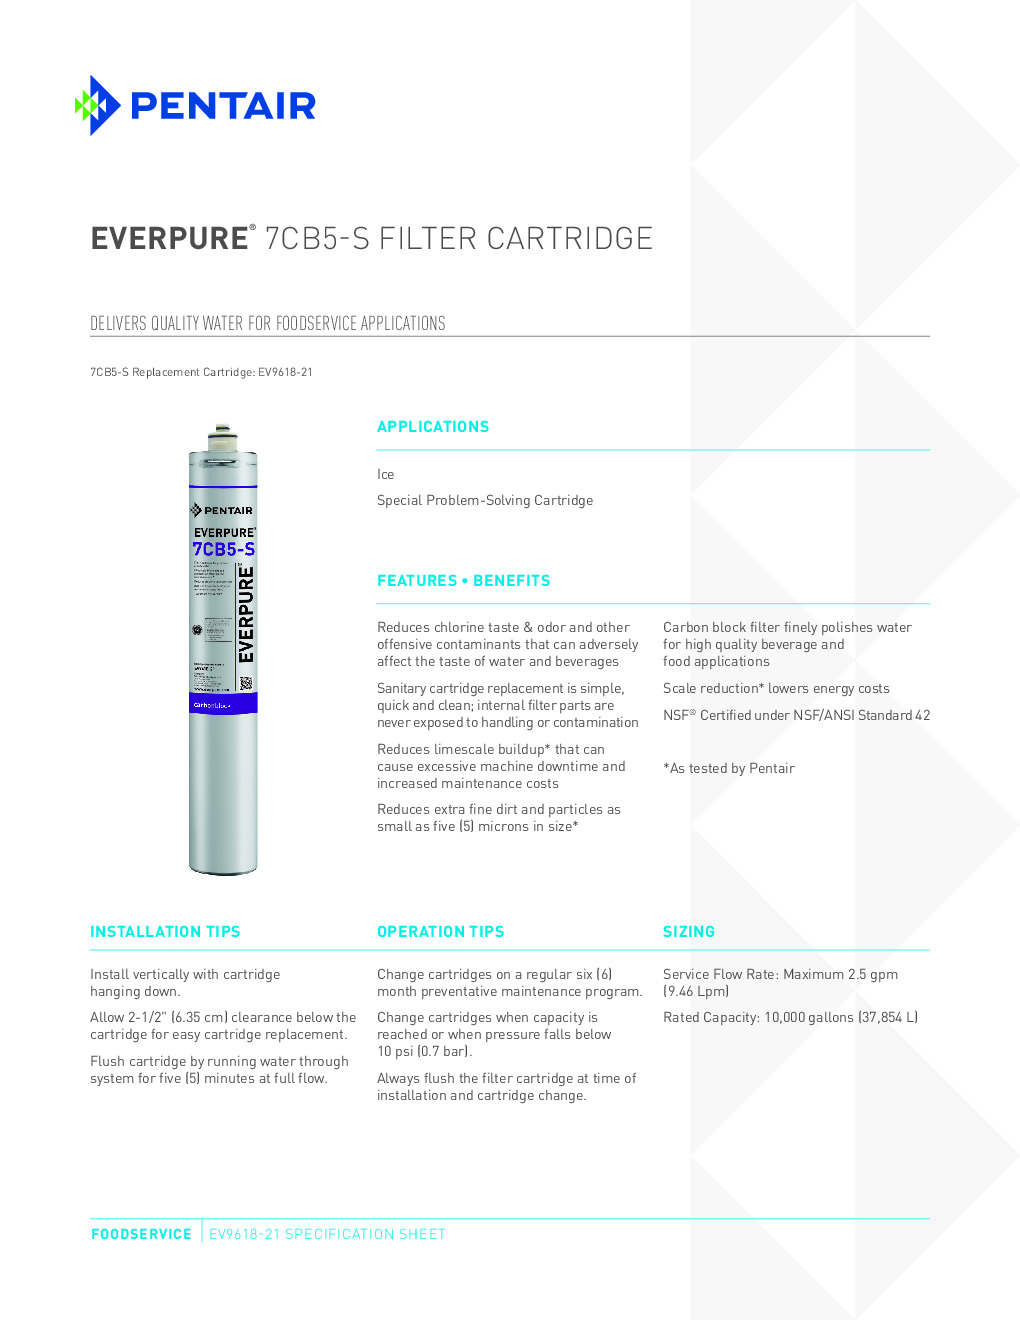 Everpure EV961821 Cartridge Water Filtration System